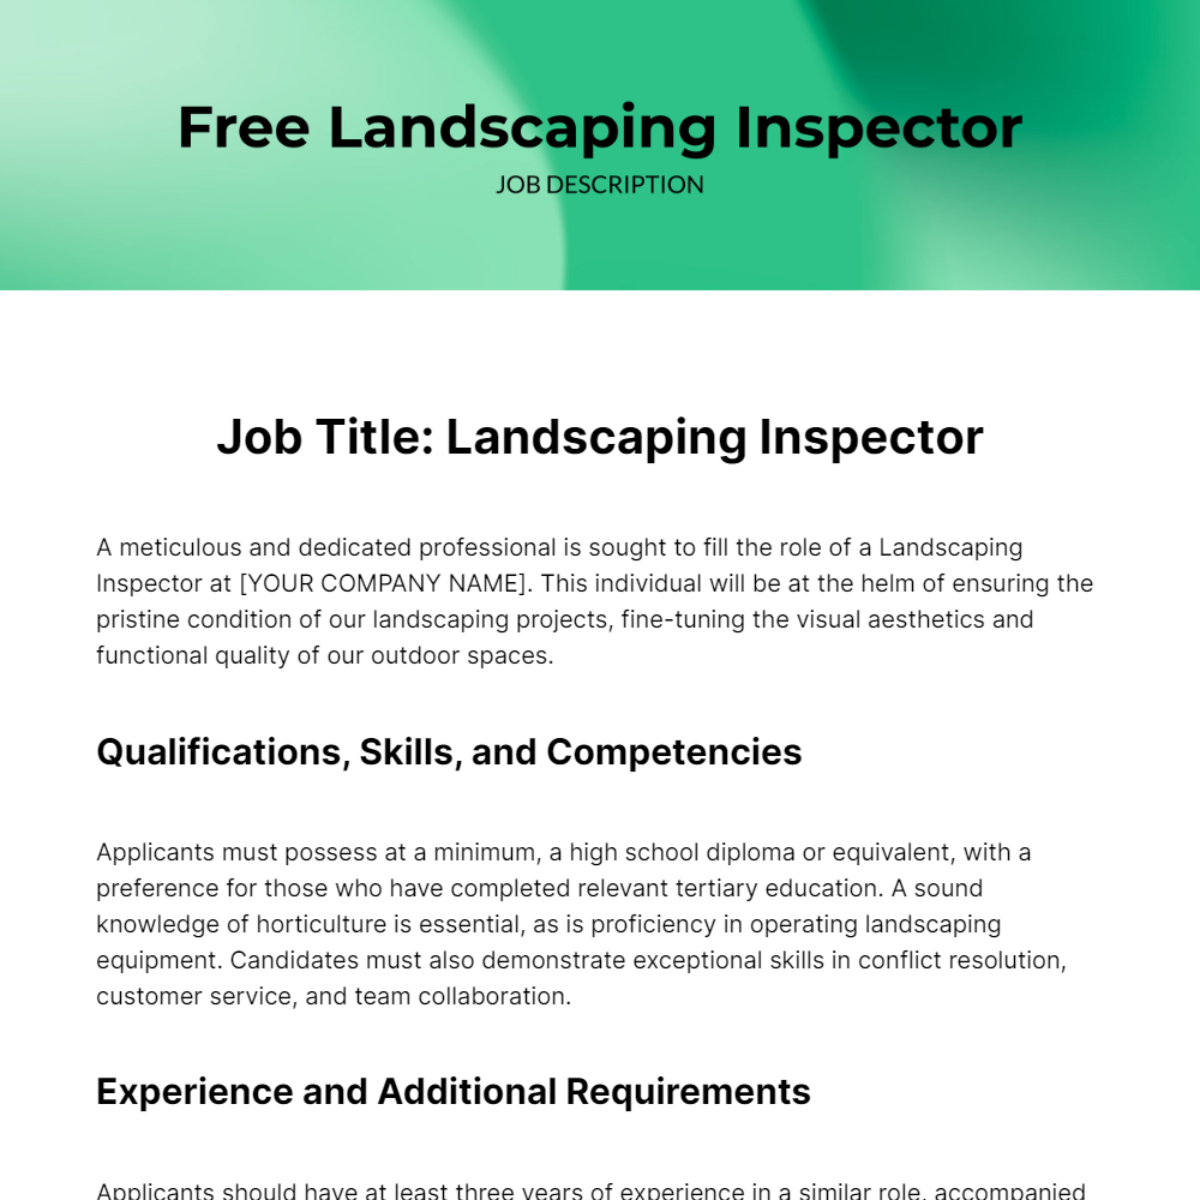 Free Landscaping Inspector Job Description Template